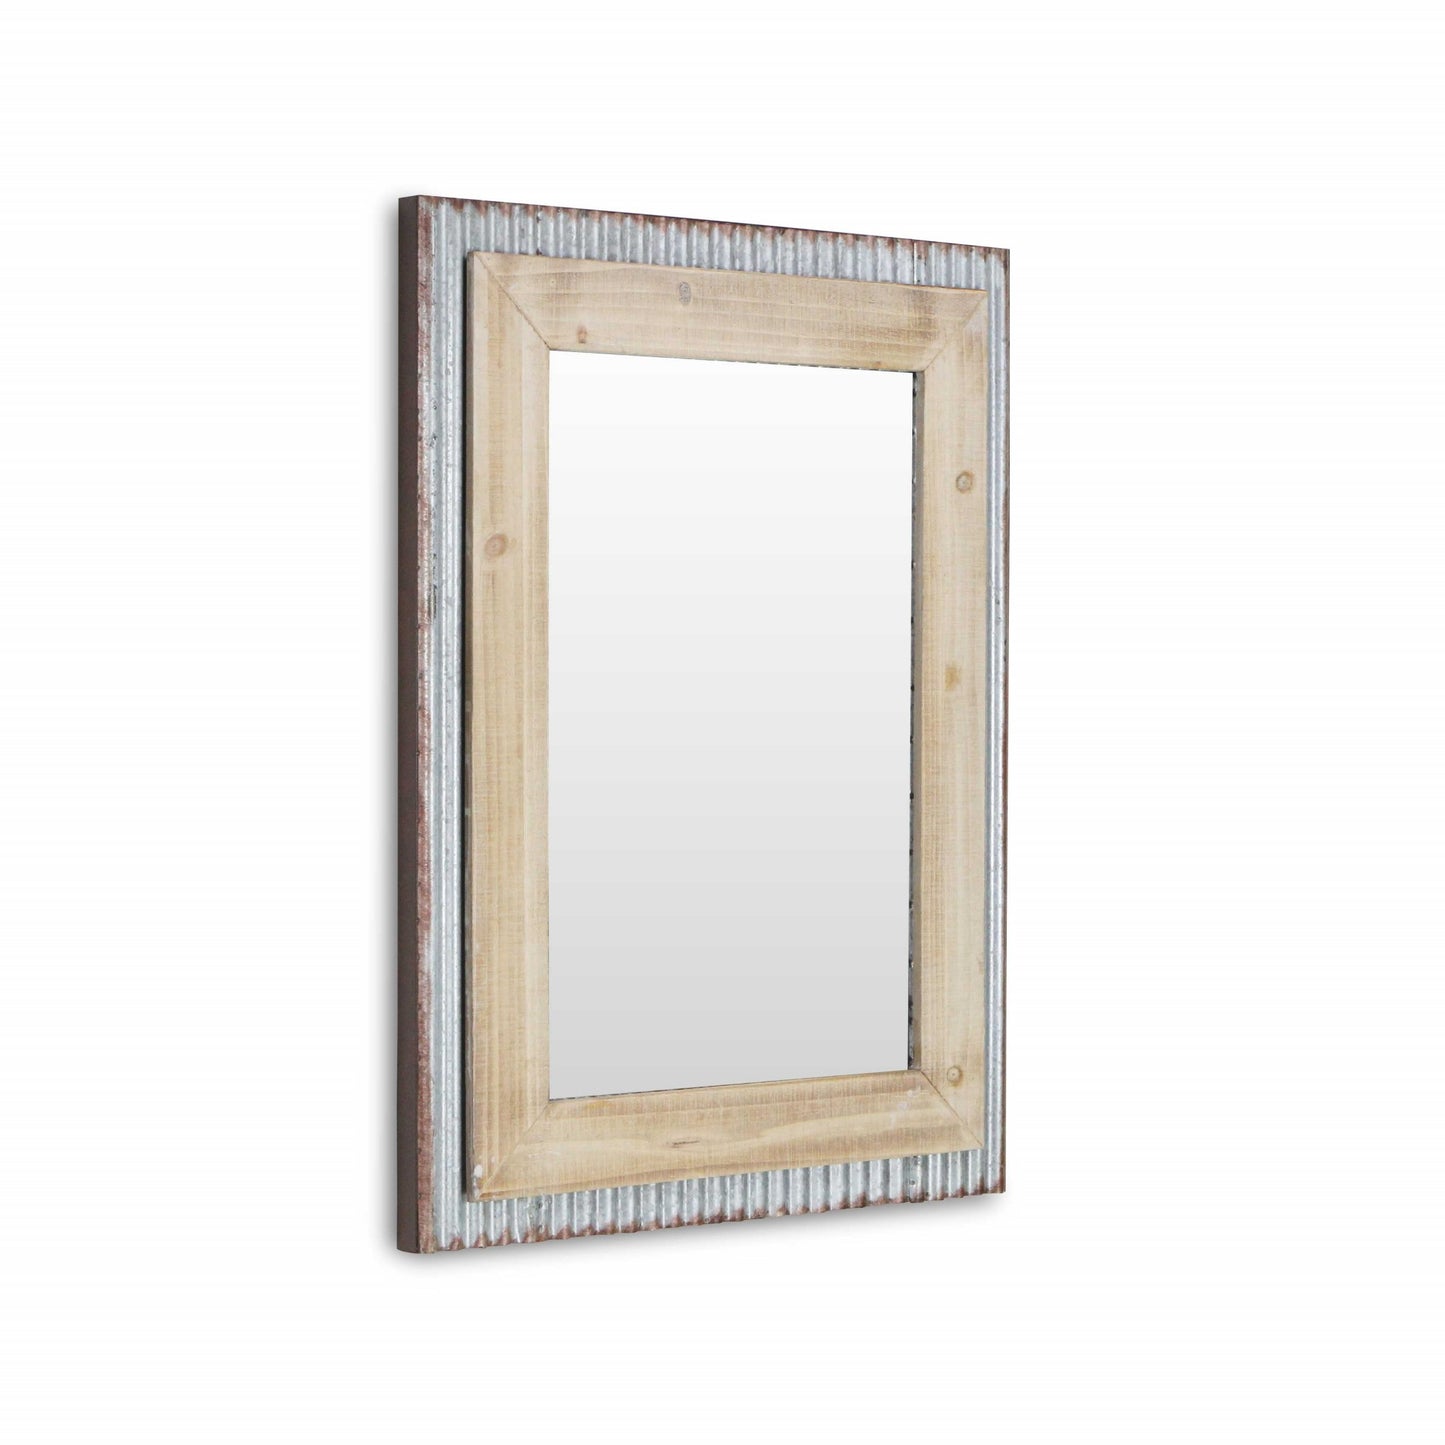 Glavanized Metal and Wood Rectangular Frame Wall Mirror